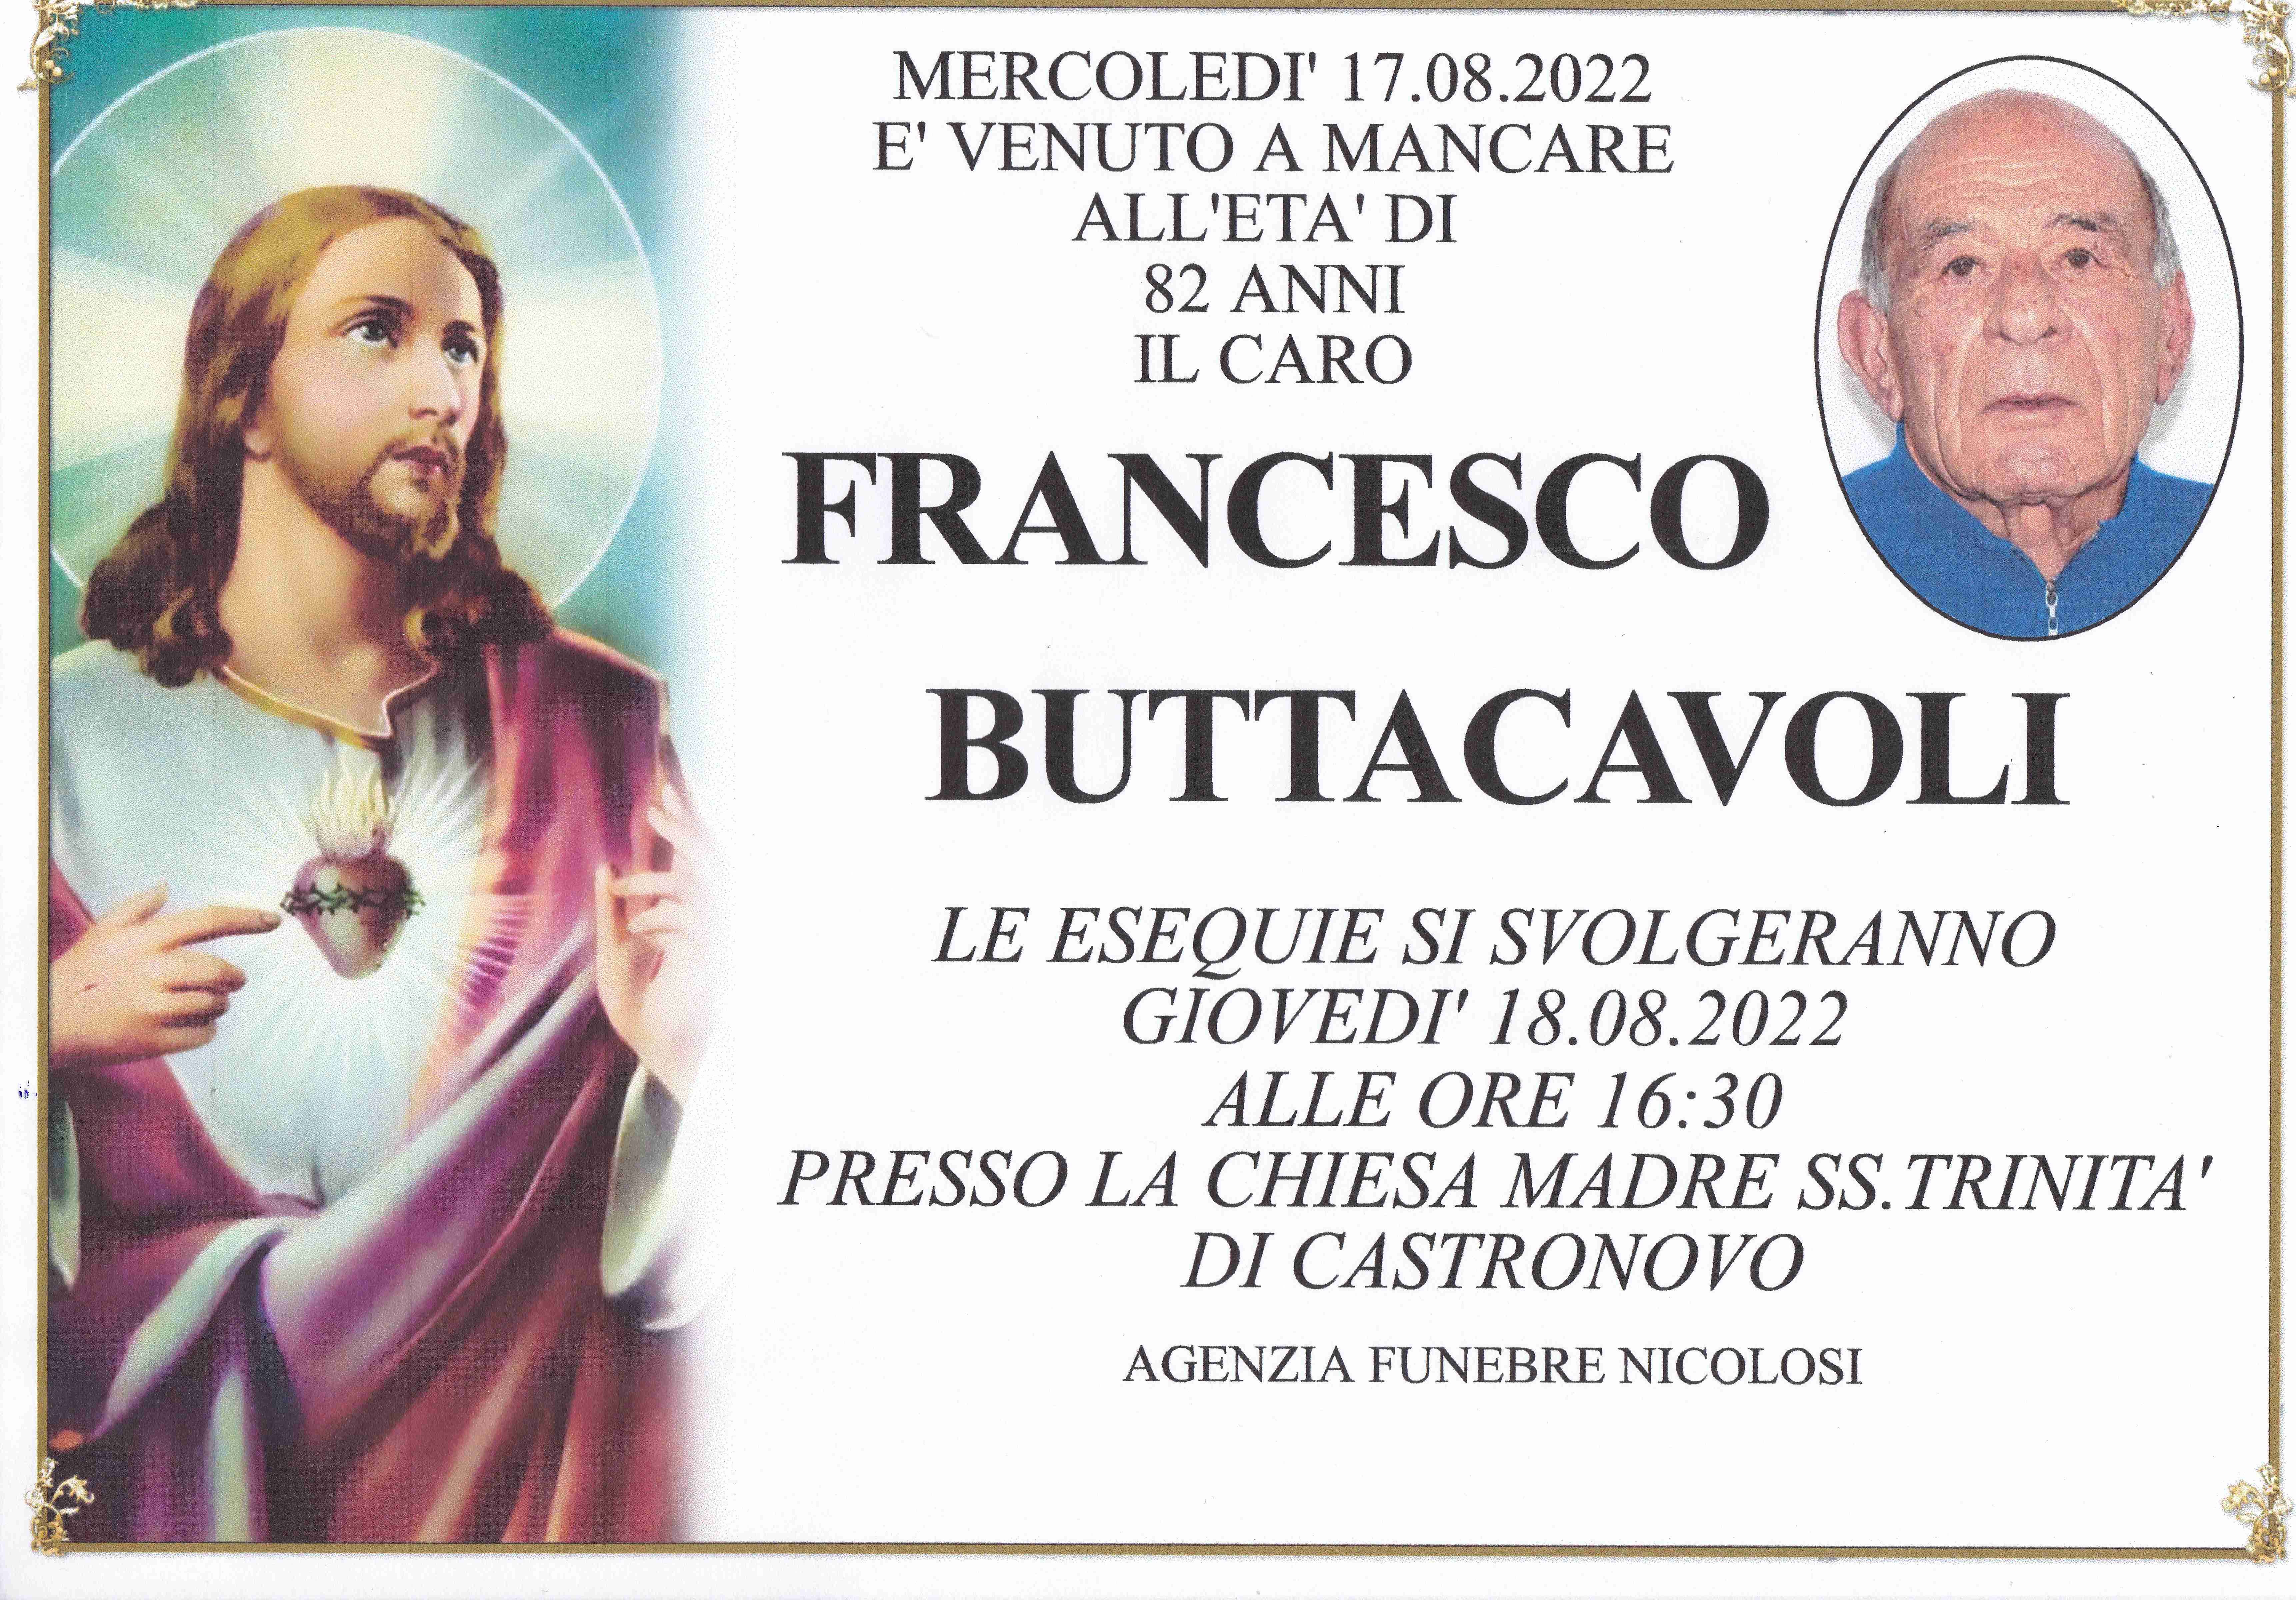 Francesco Buttacavoli